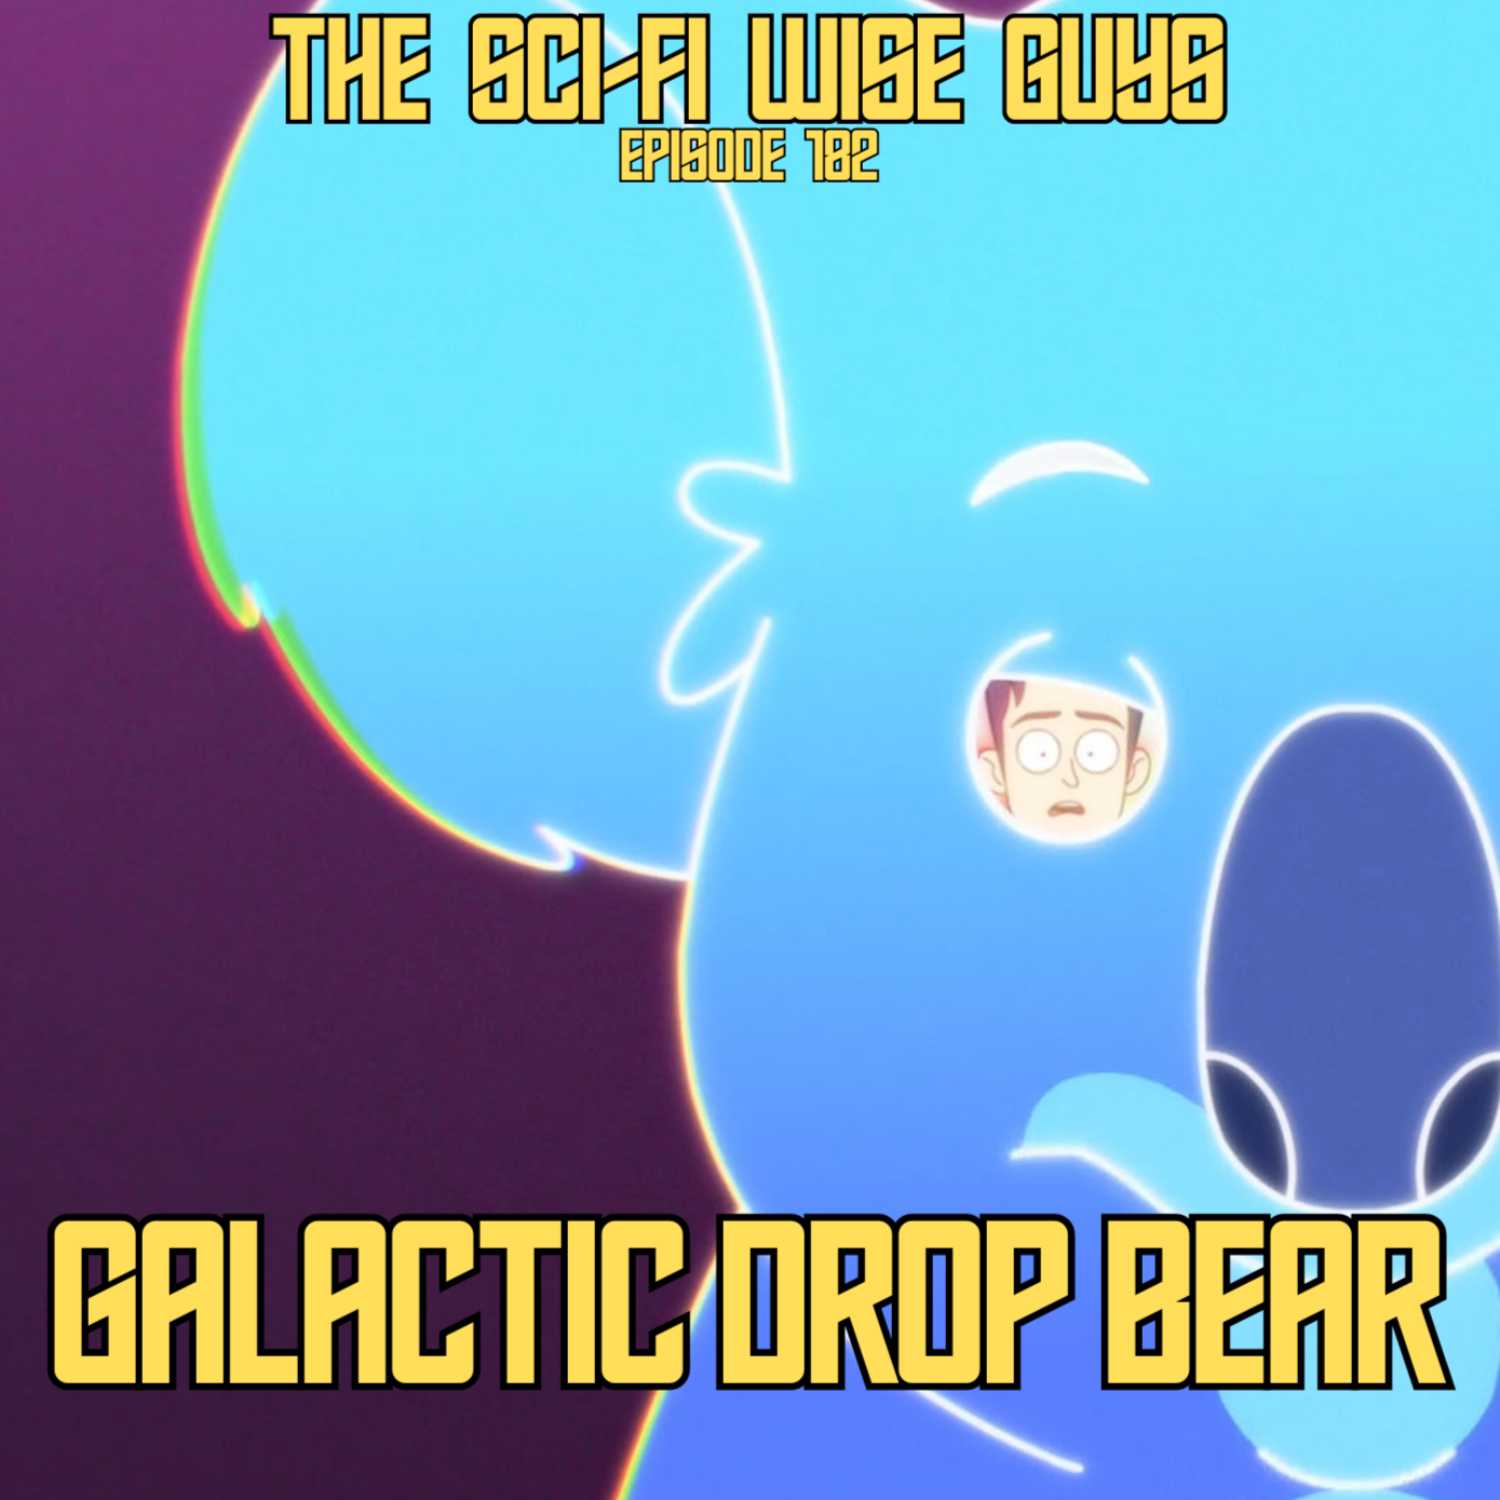 Galactic Drop Bear (Star Trek: Lower Decks Season 4 Episode 3)